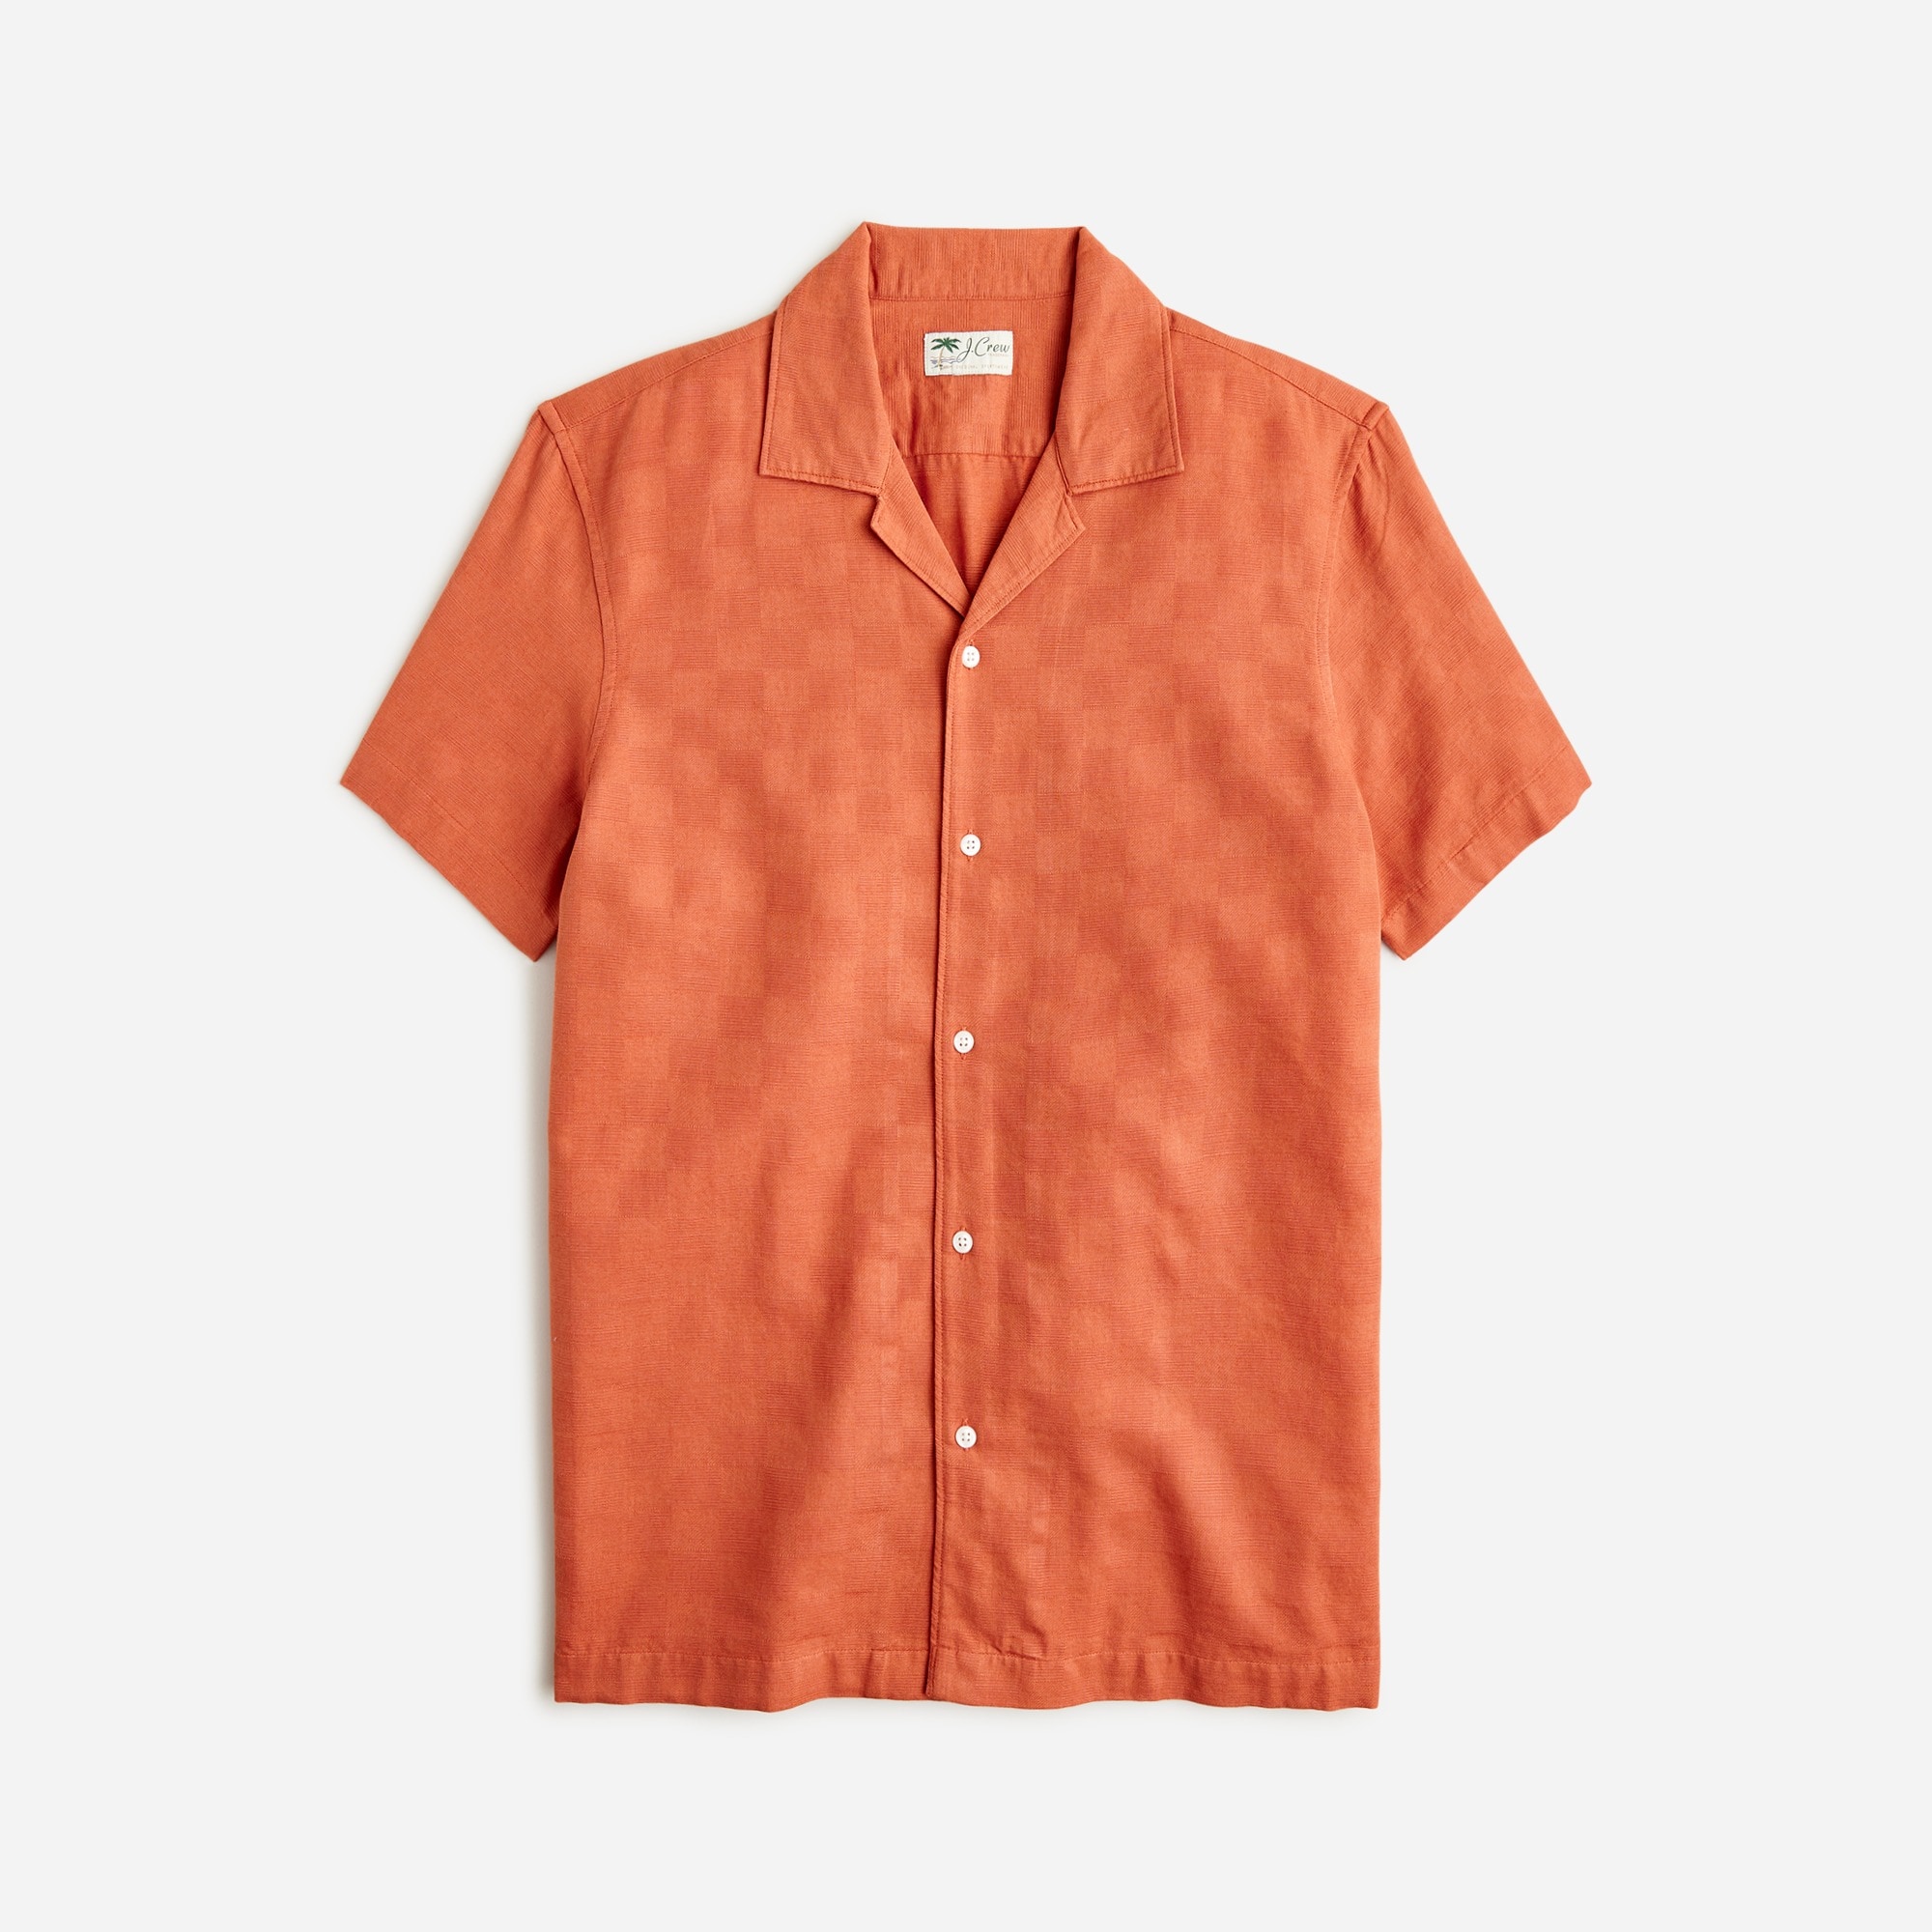  Short-sleeve textured cotton camp-collar shirt